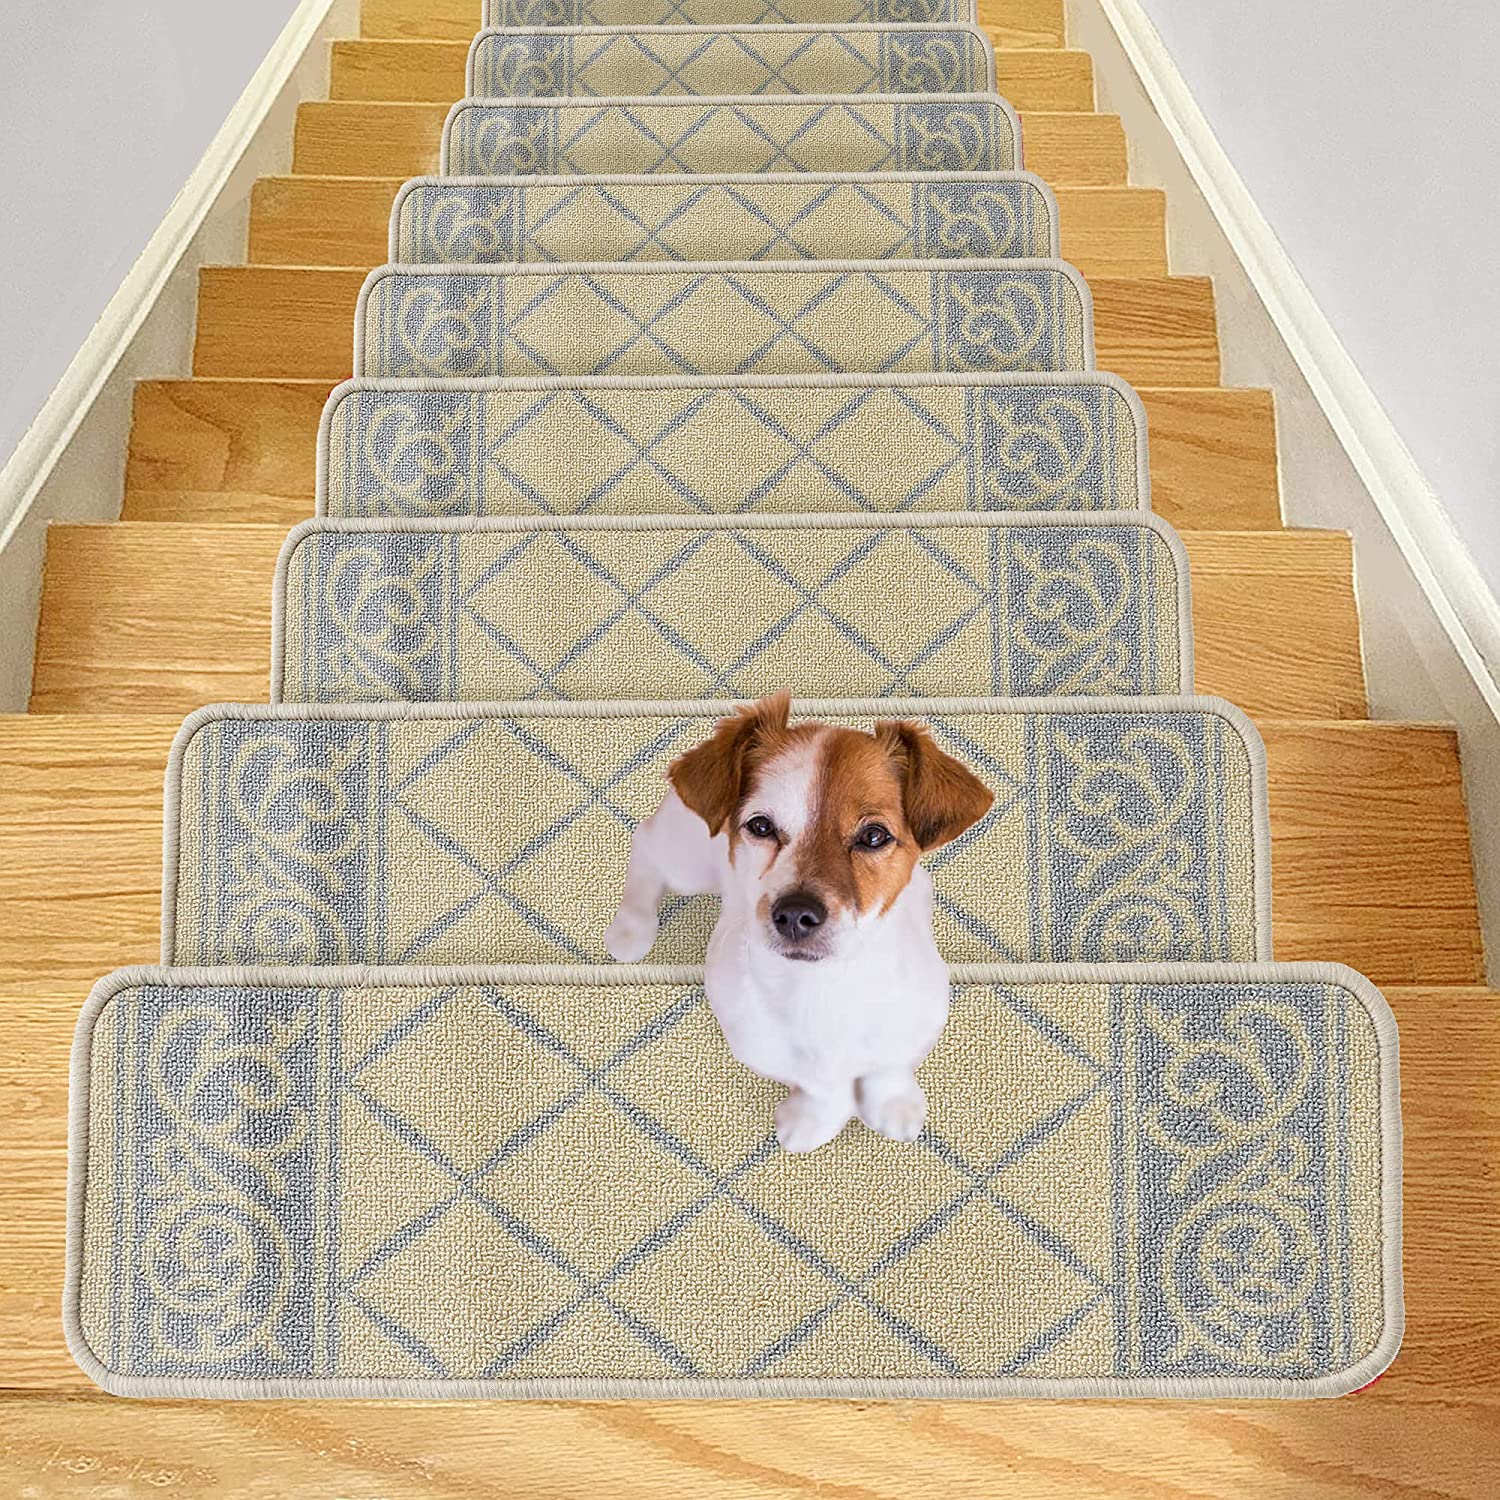 Carpet Installation Pad for Steps - Stair Runner Store